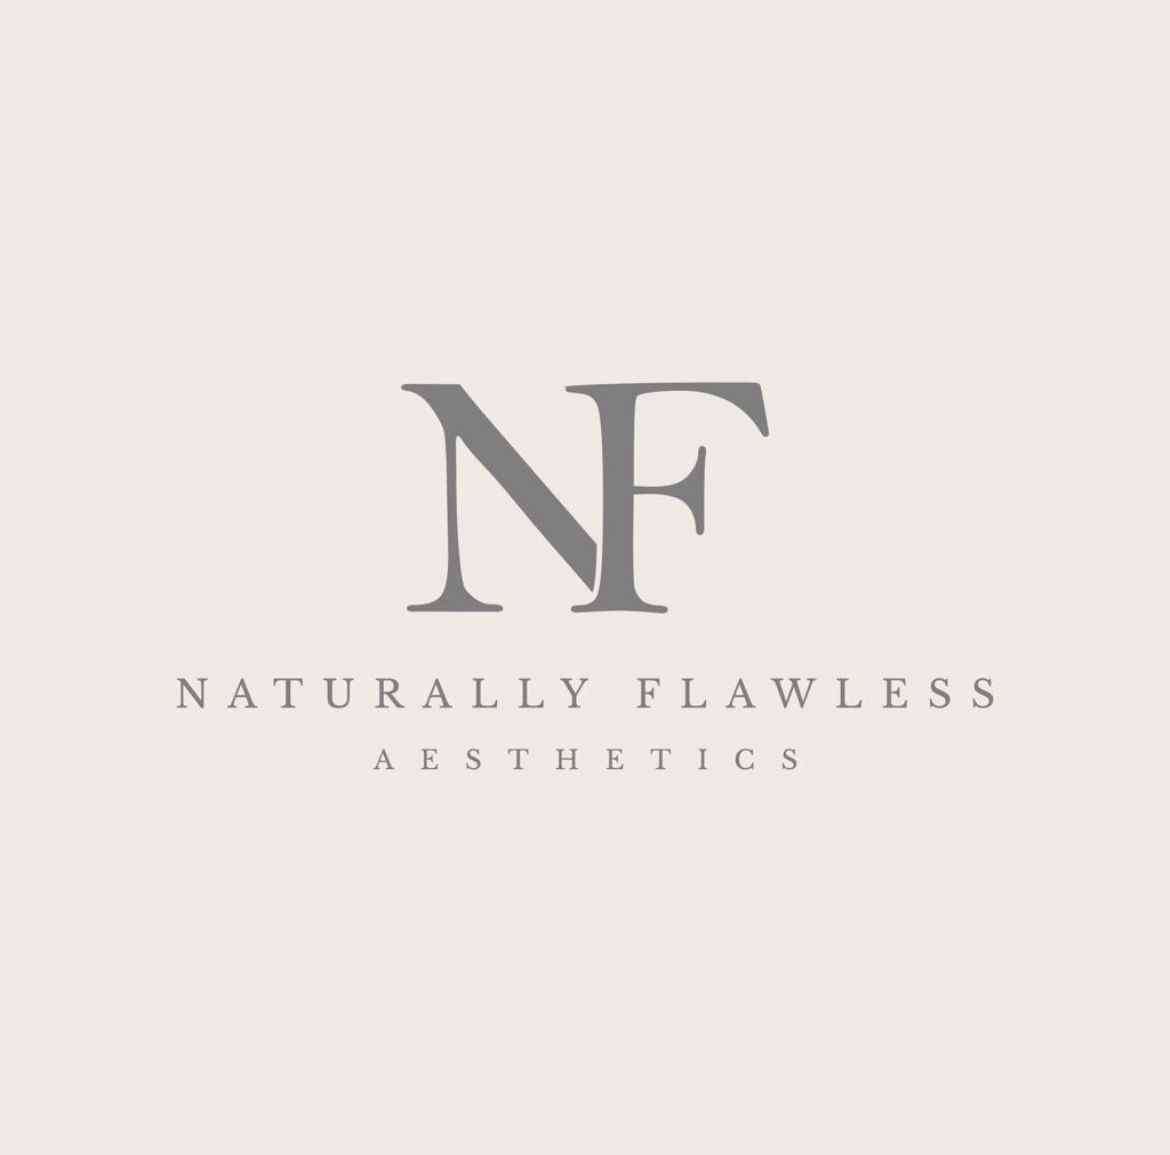 Naturally Flawless Aesthetics logo